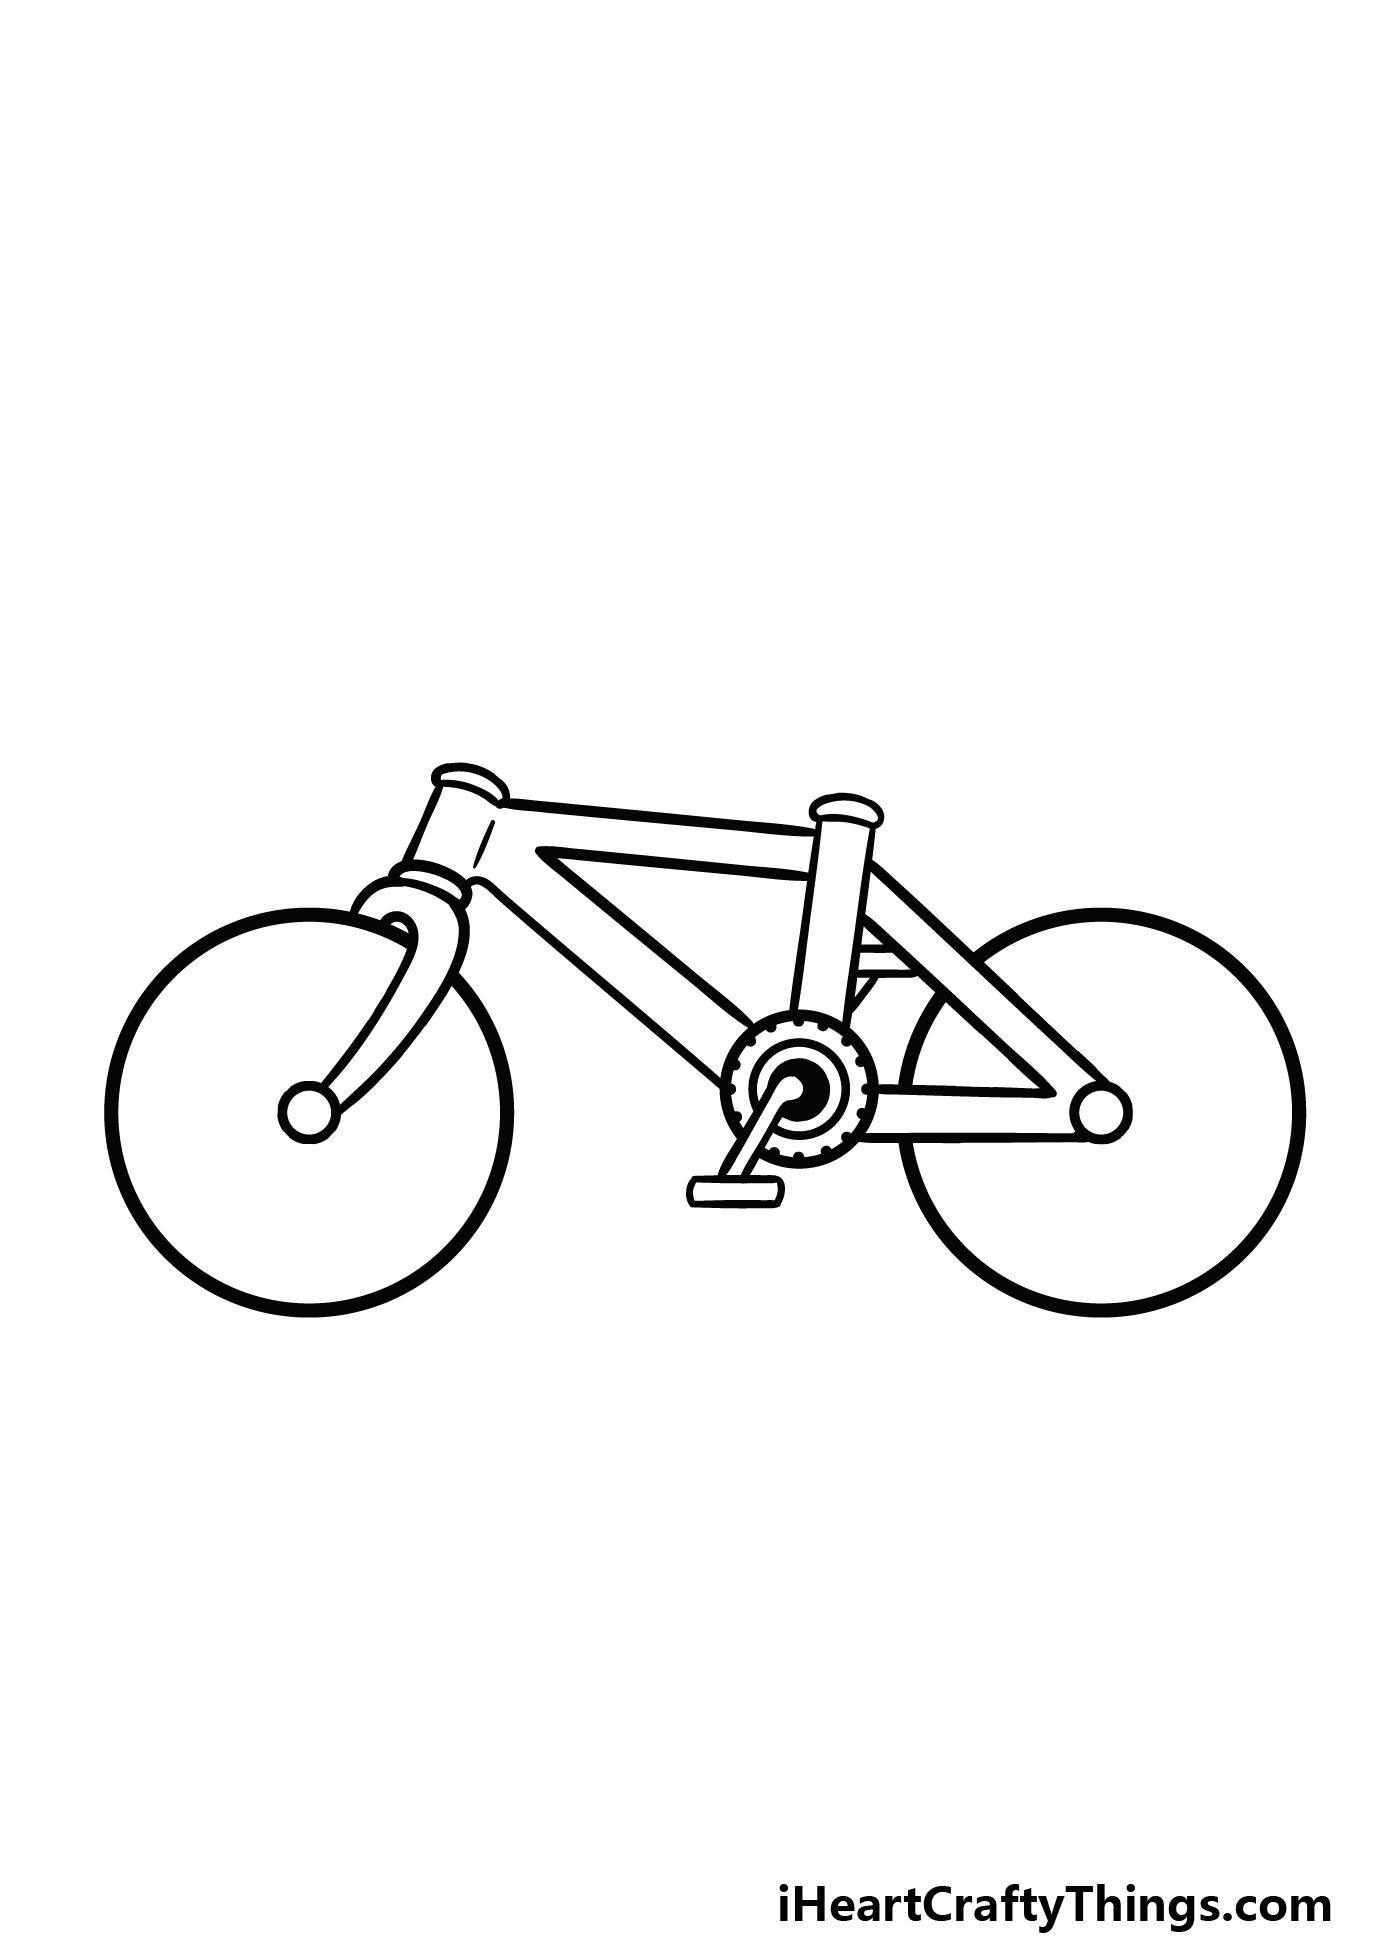 Mountain Bike Sketch | PonchoGuerrero | Flickr-as247.edu.vn